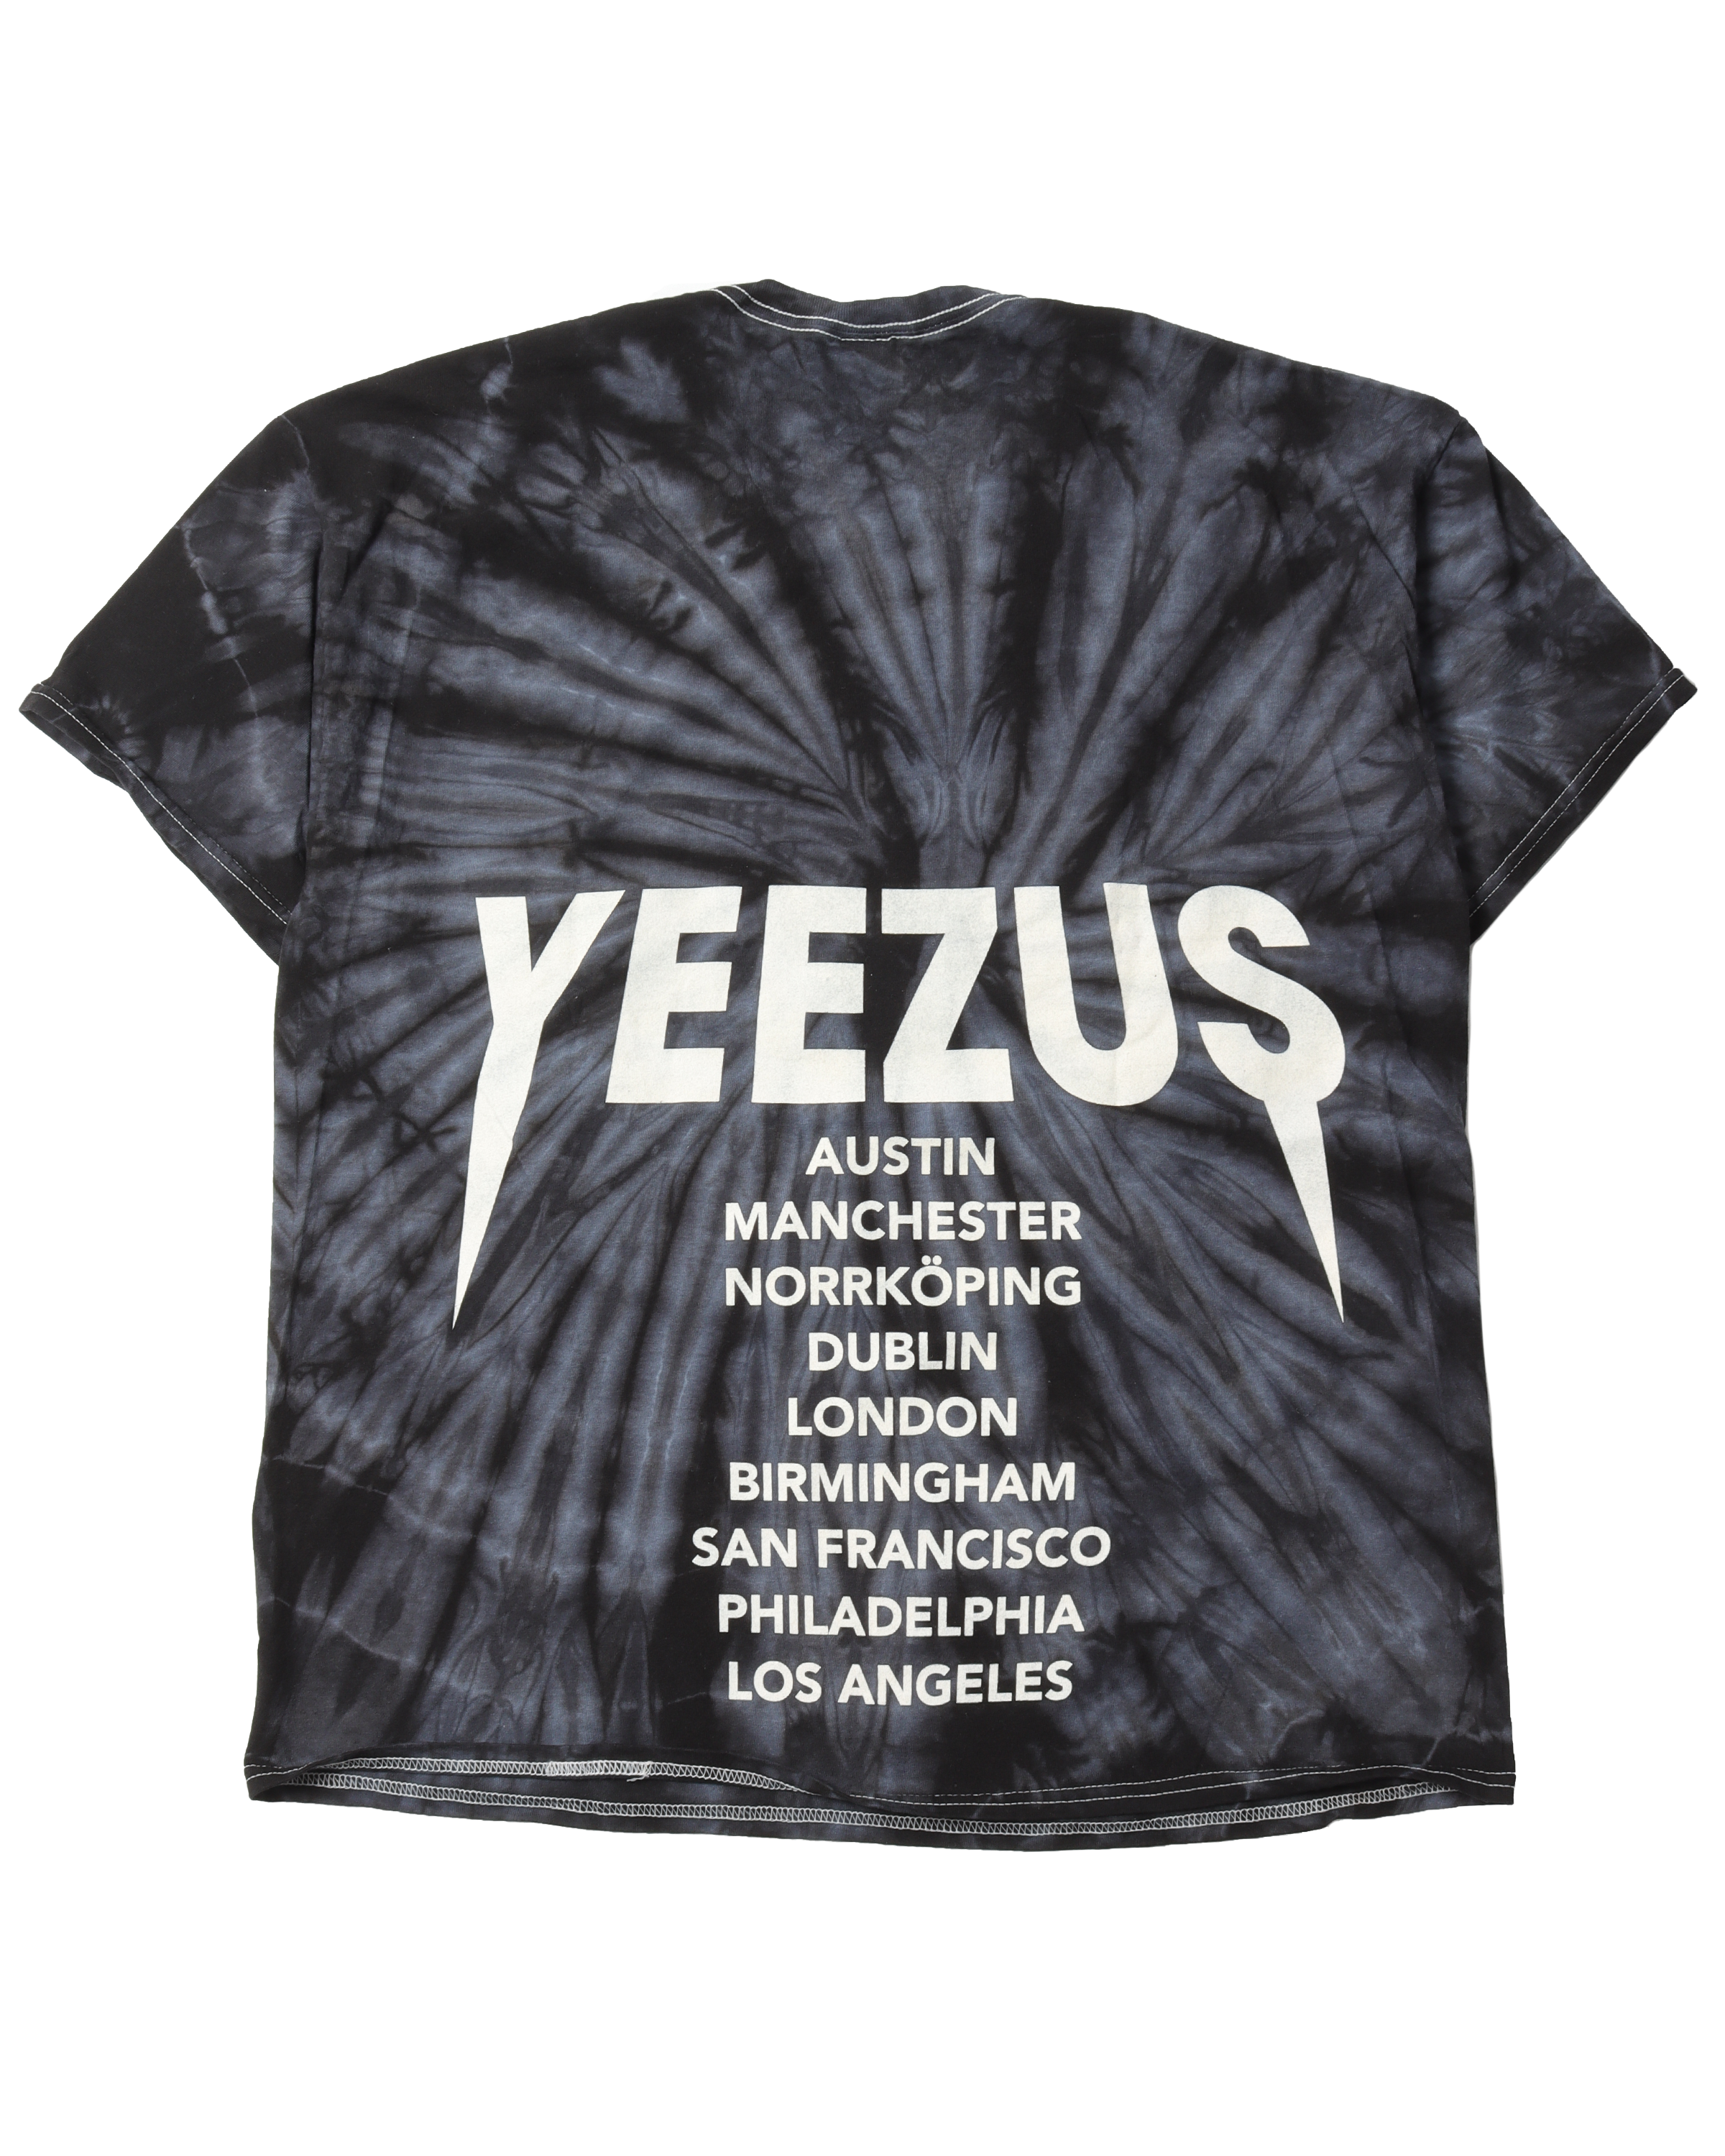 Yeezy Tour T-Shirt